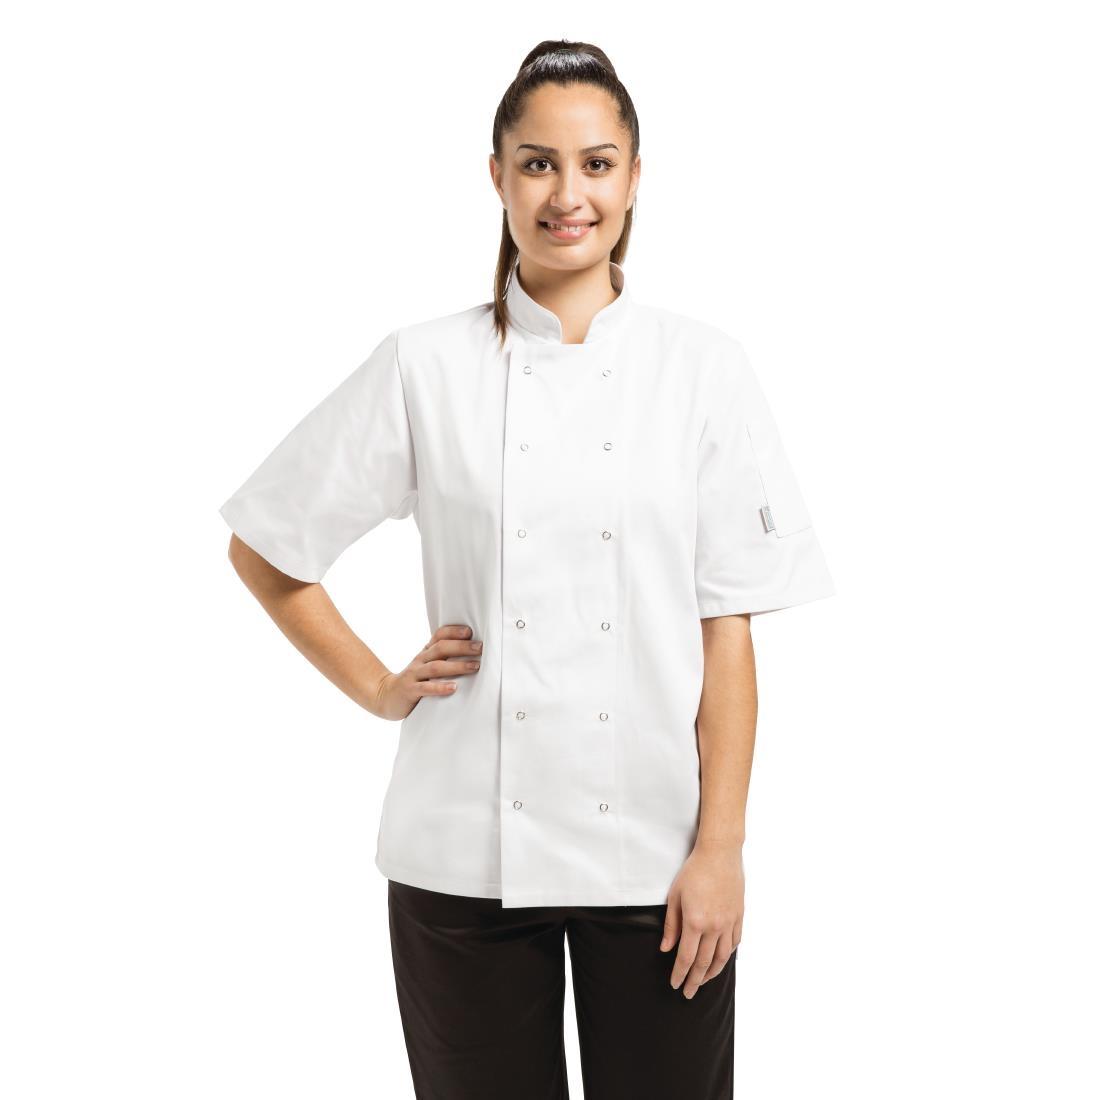 Whites Vegas Unisex Chefs Jacket Short Sleeve White S - A211-S  - 2